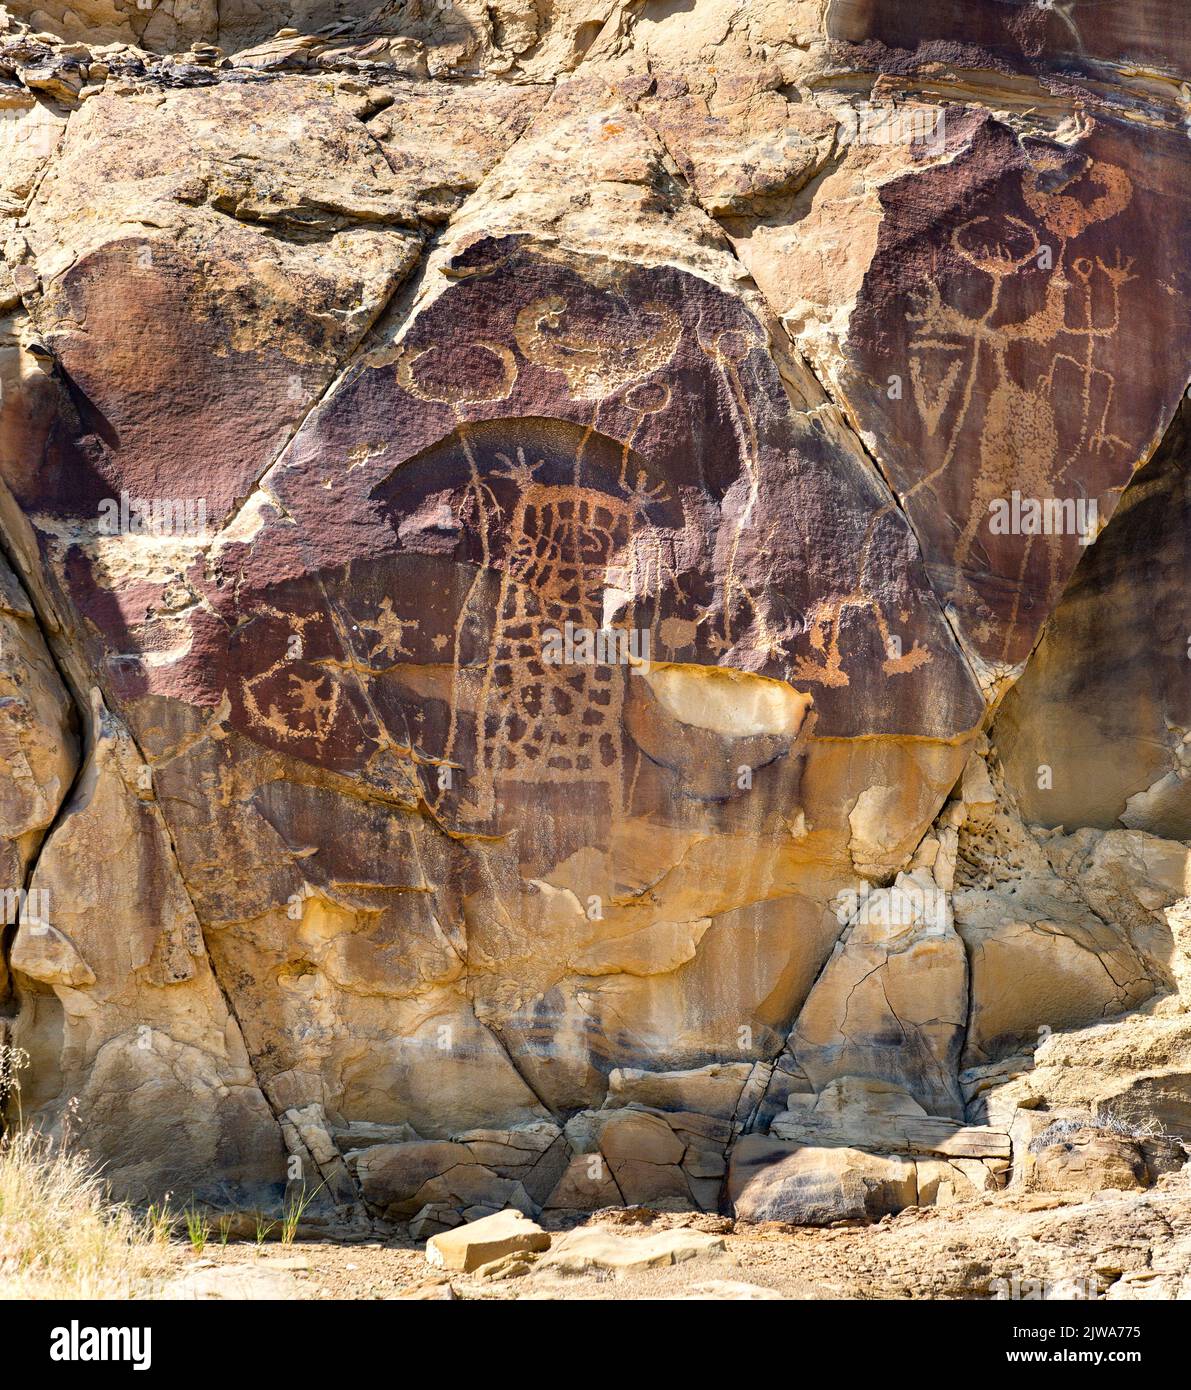 Petroglifos arte rupestre en Legend Rock State Archaeological Site, Wyoming - paneles de arenisca tallados con figuras animales antropomorfas y zoomórficas Foto de stock